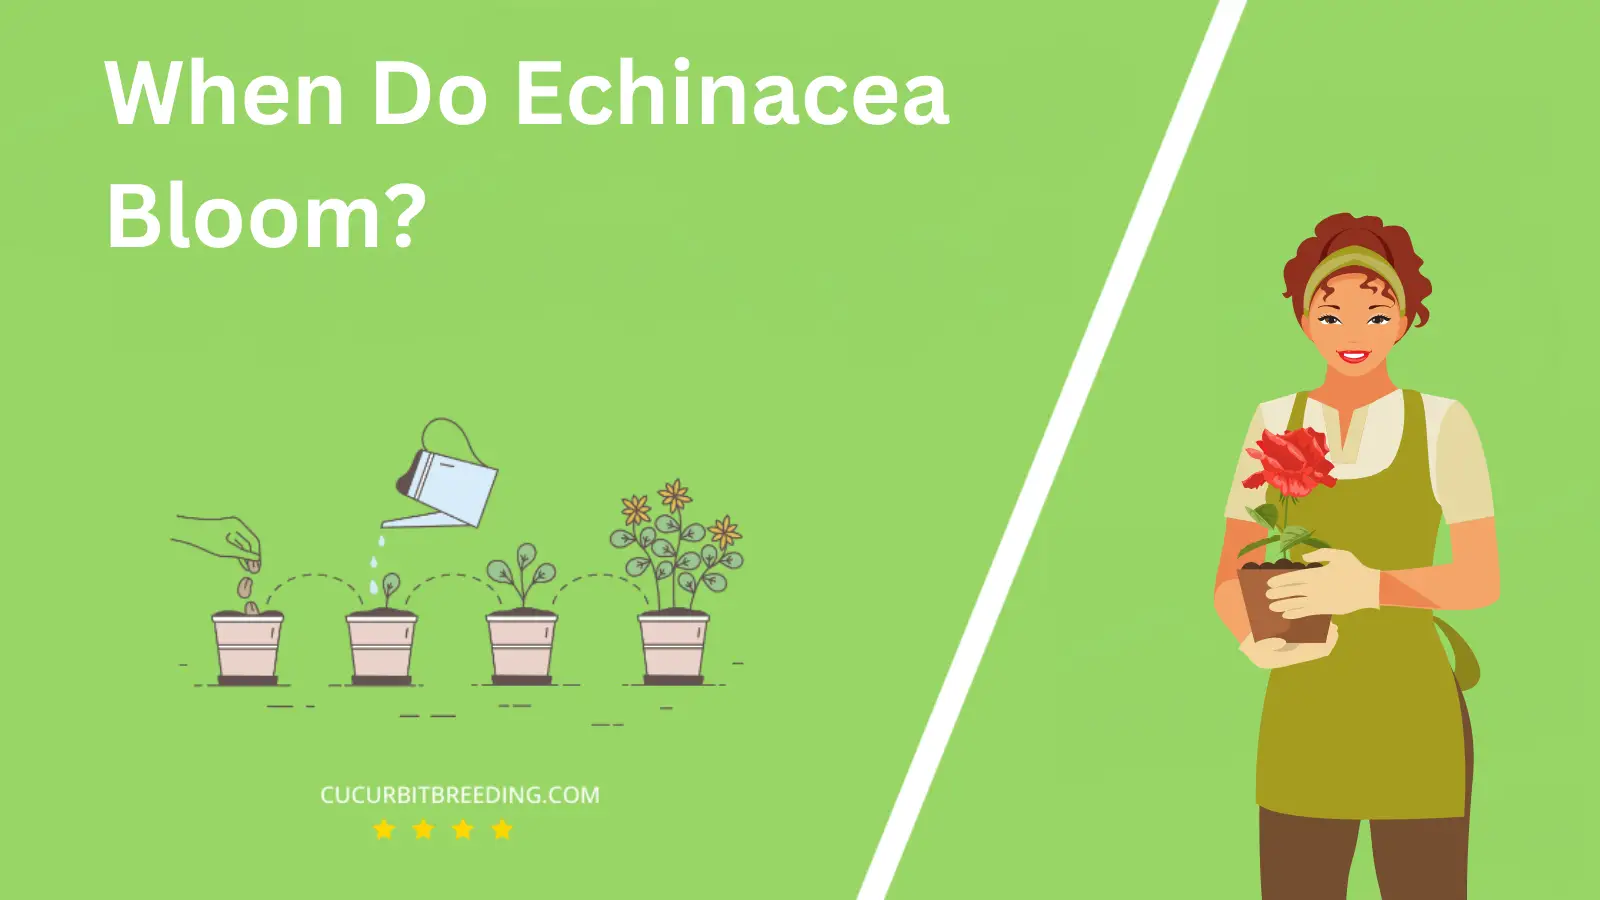 When Do Echinacea Bloom?